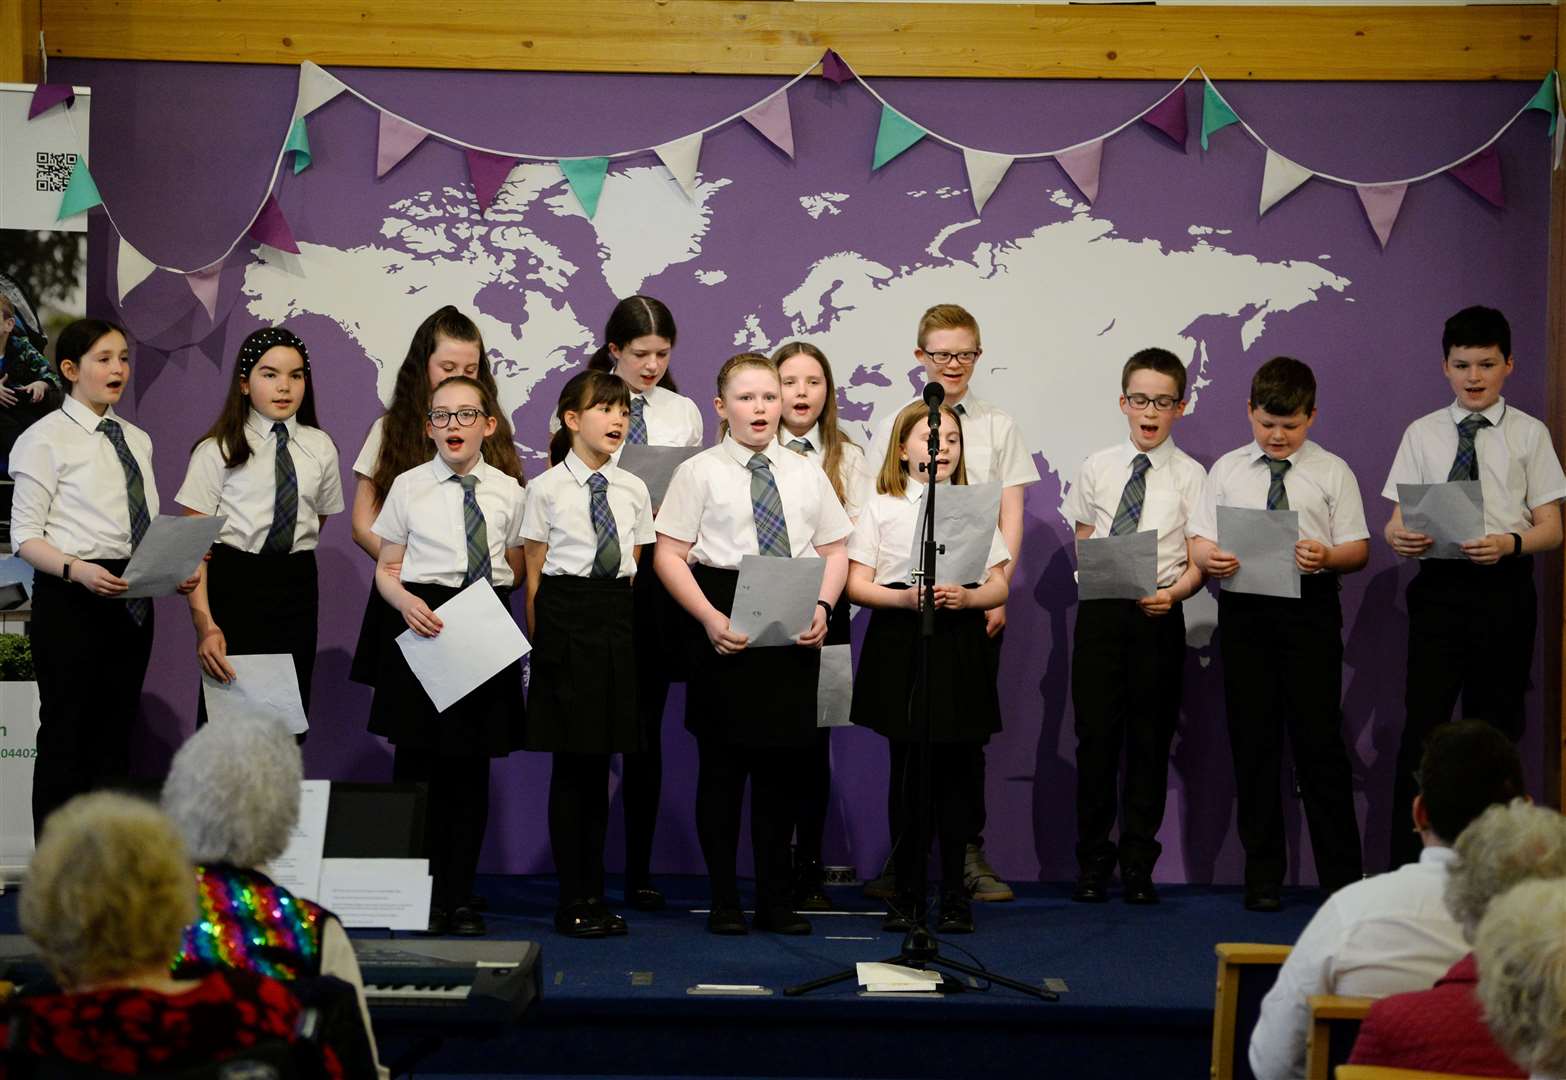 The Gaelic School children's choir perform in the concert at Smithton Church.